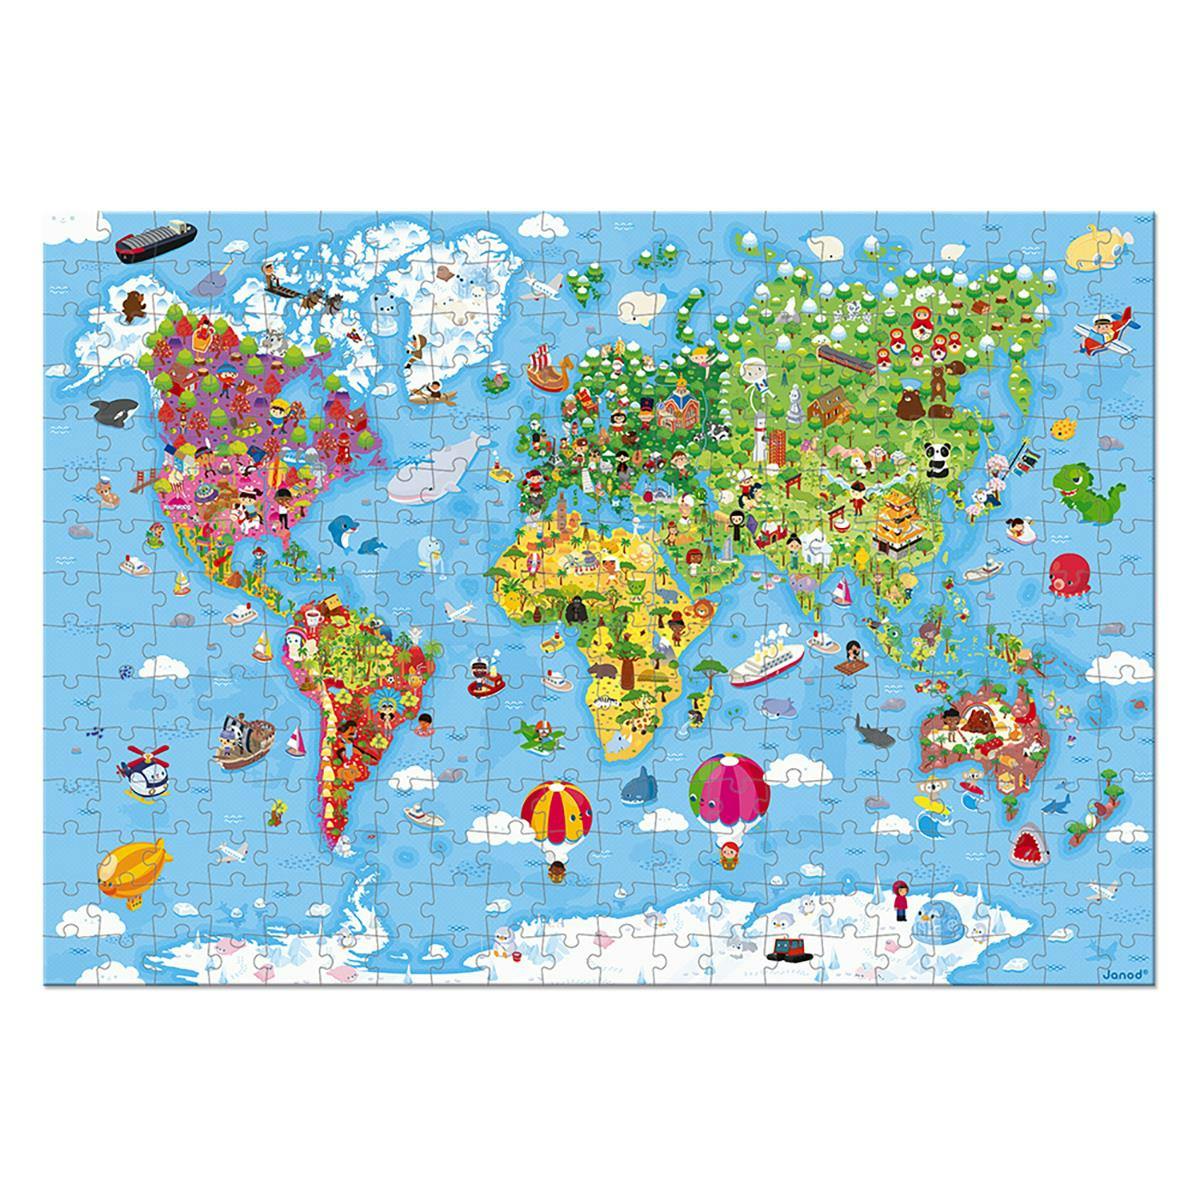 Pussel i väska - World Giant Puzzle 300